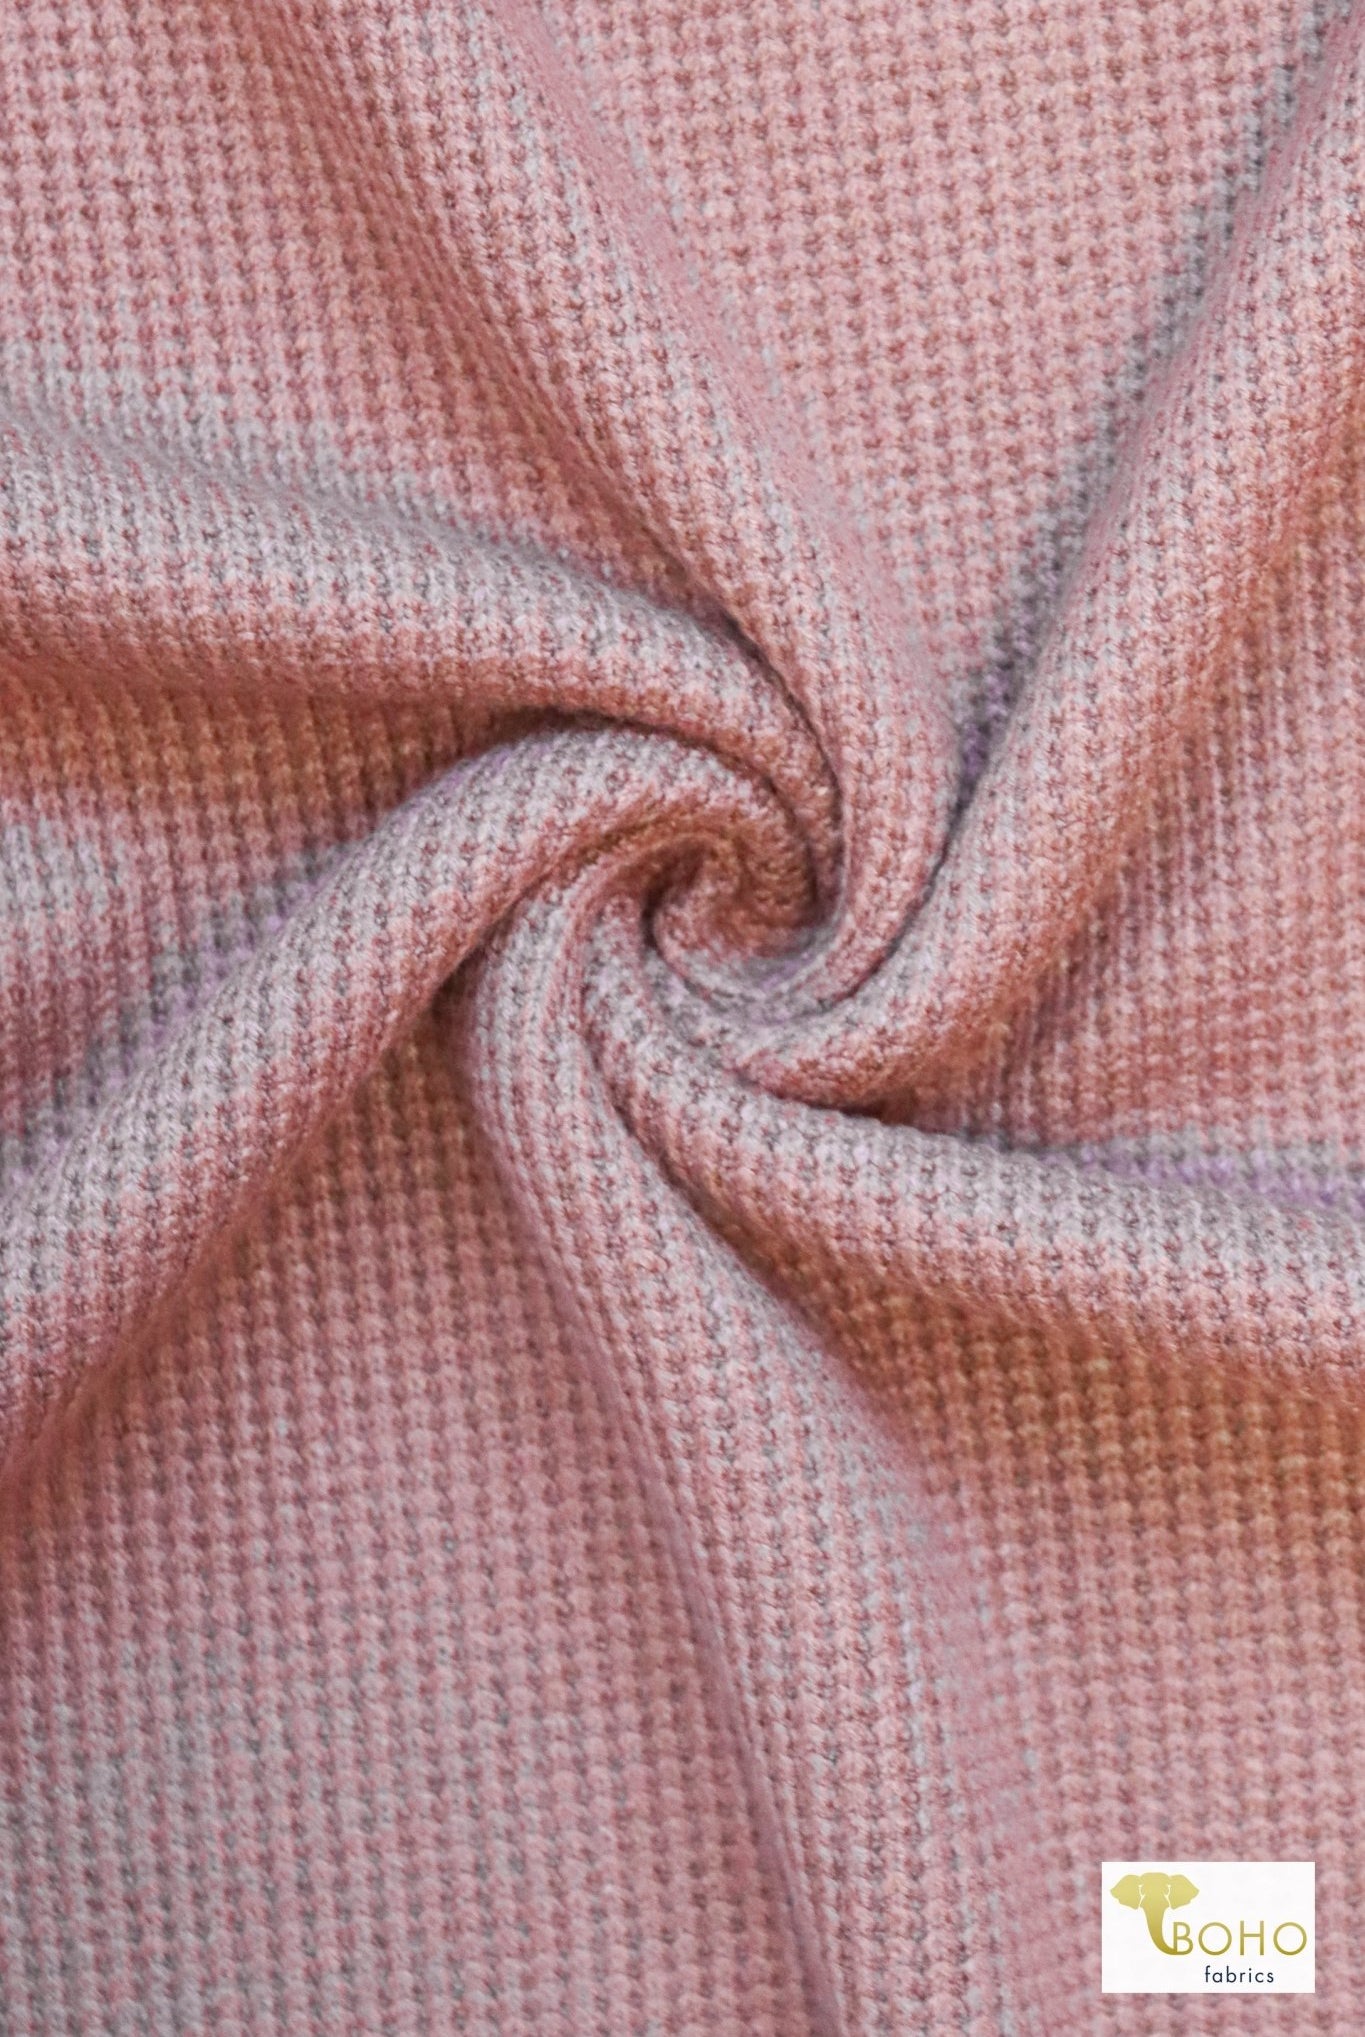 Mauve Cable Rib, Luxe Sweater Knit Fabric - Boho Fabrics